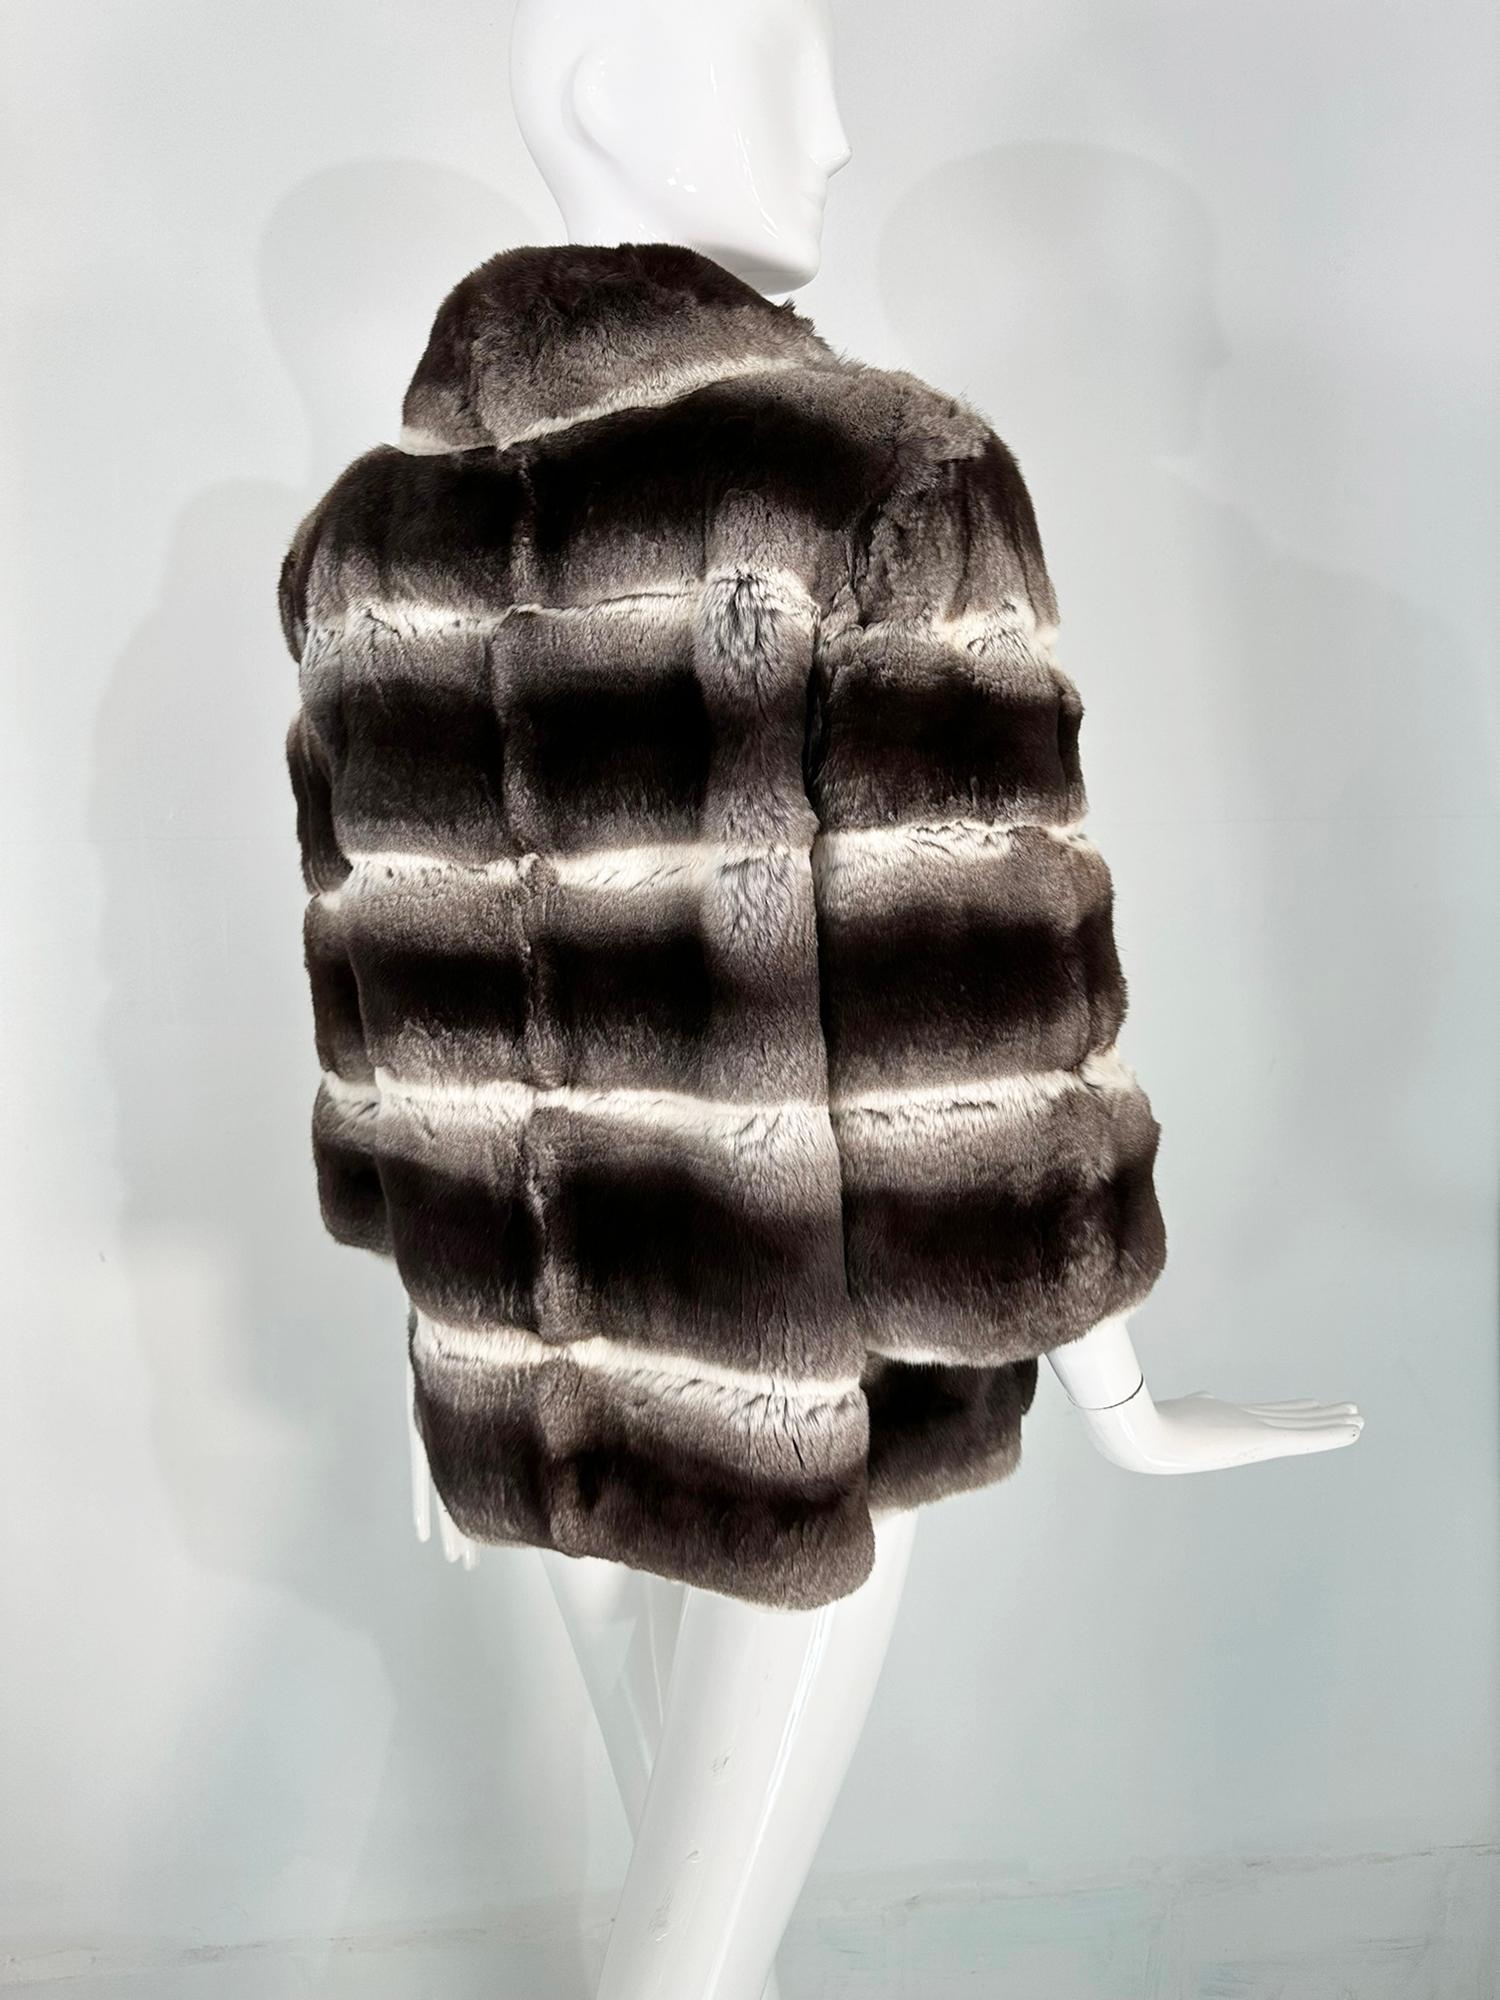 Dennis Basso Chinchilla Fur Jacket in Light & Dark Grey with Cream 2013 S-M 2013 For Sale 3